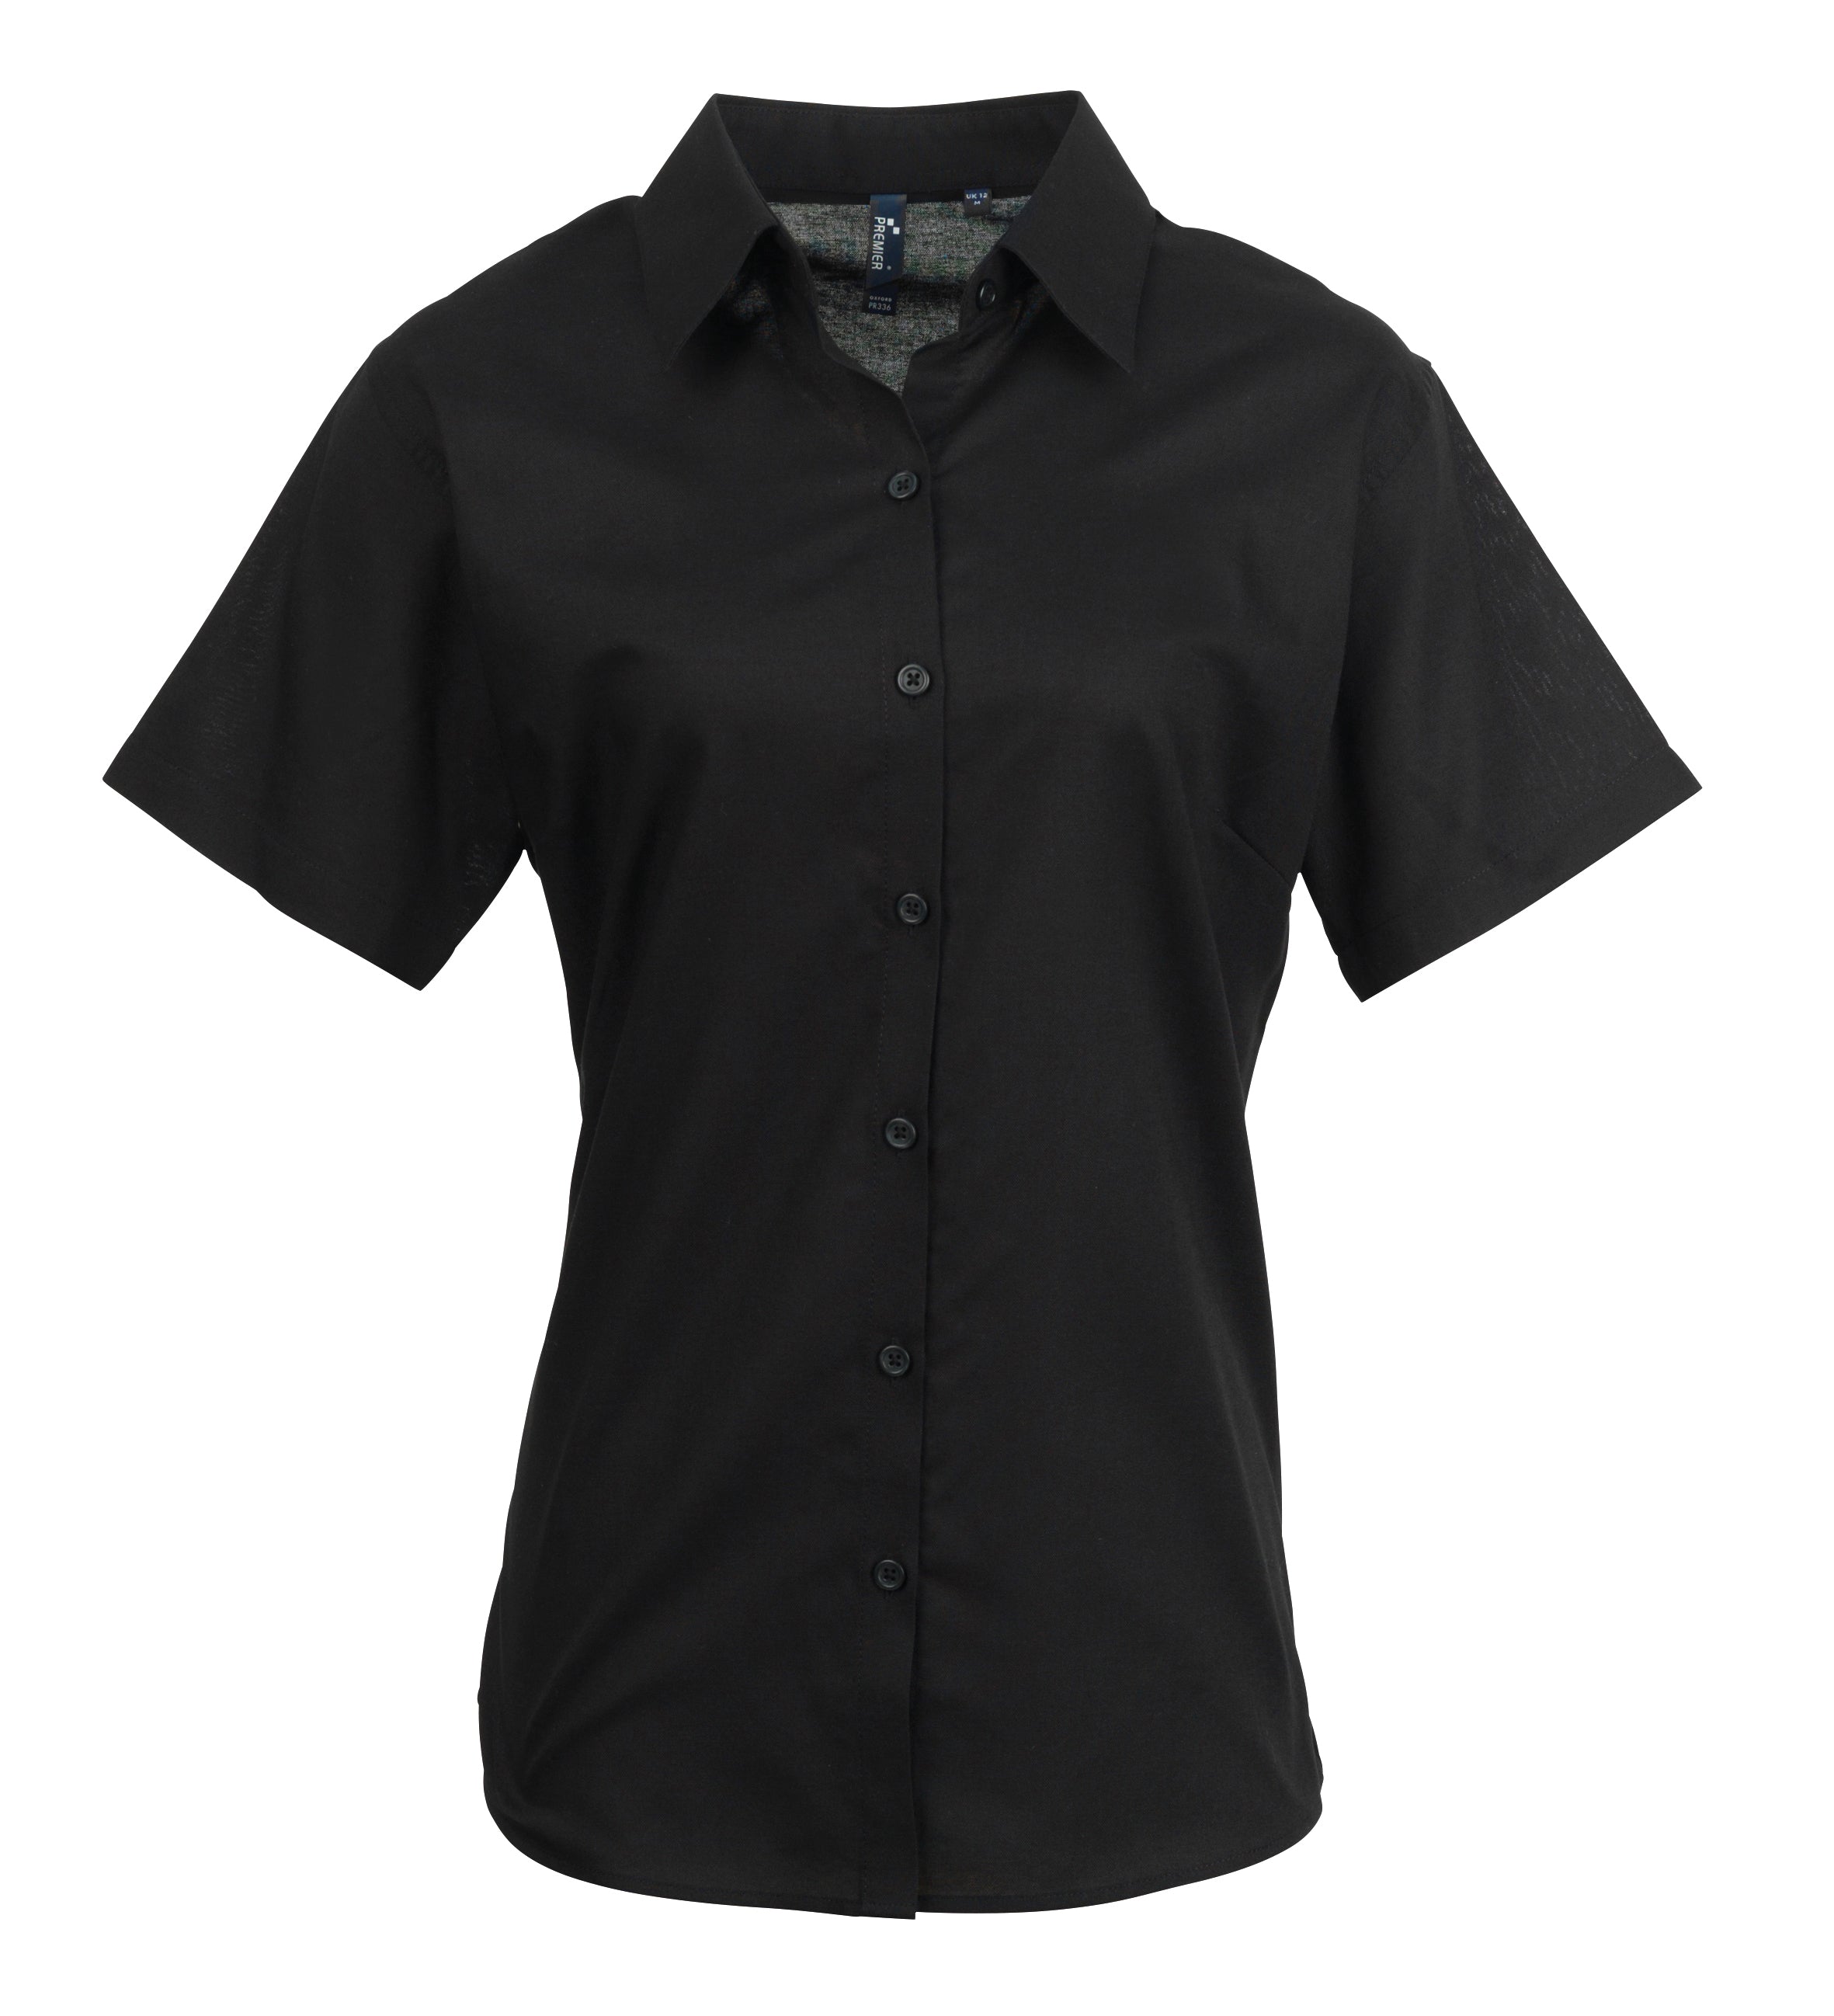 Women's signature Oxford short sleeve shirt -Premier Collection –  Ackermann's Apparel